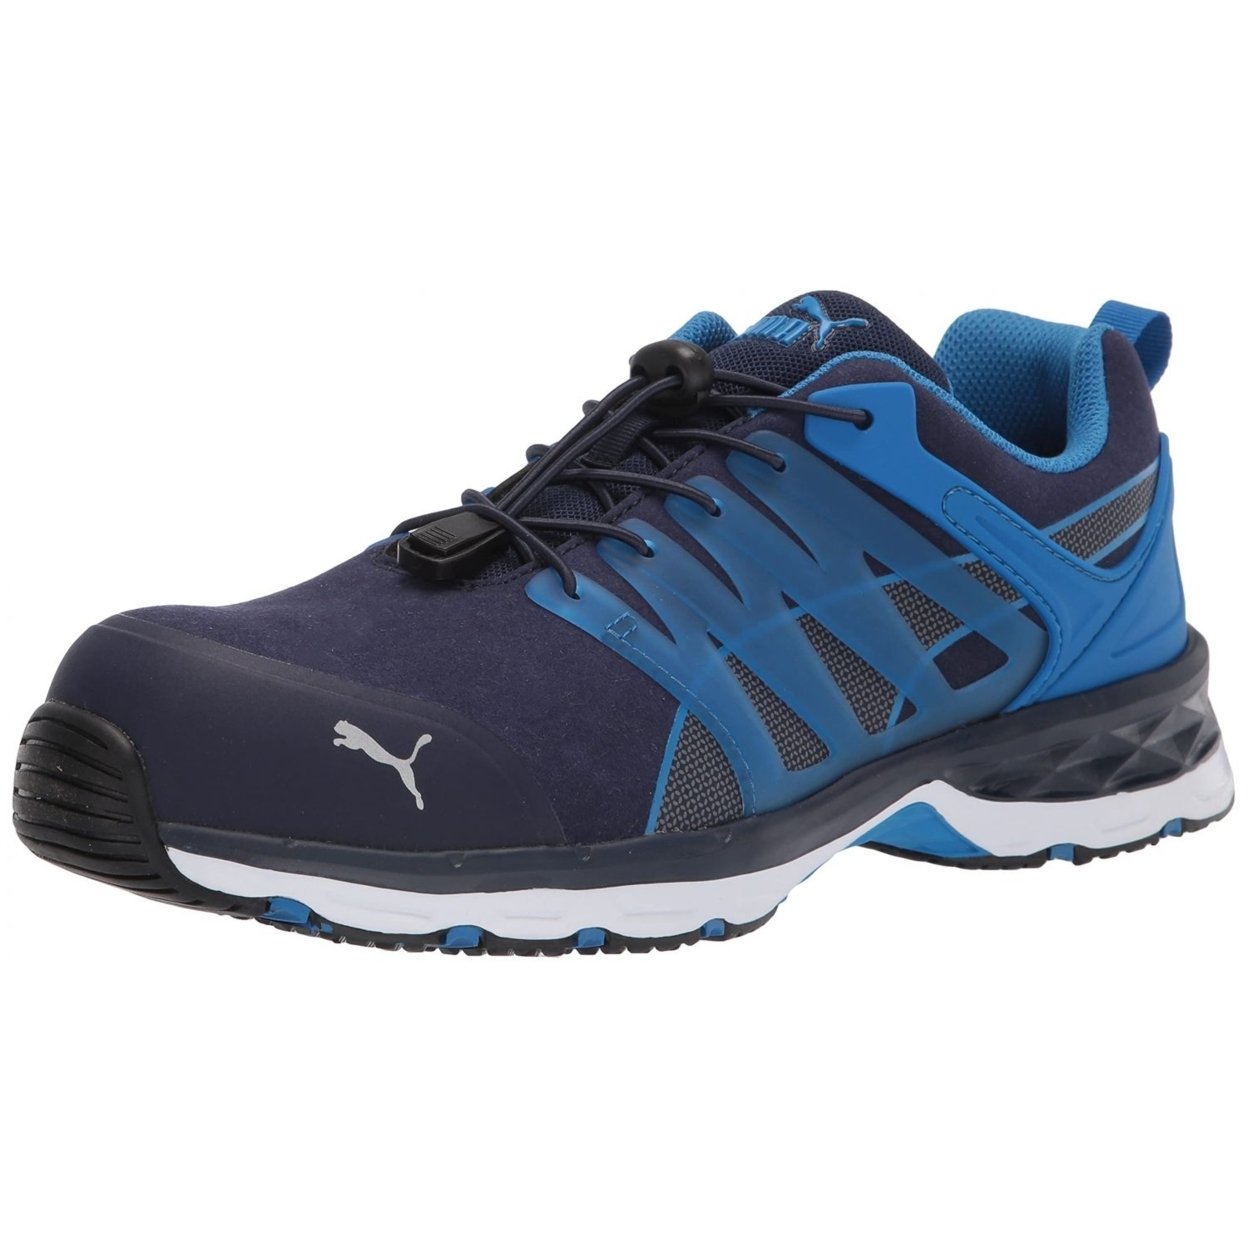 PUMA Safety Men's Velocity 2.0 Composite Toe ESD Work Shoe Blue - 643855 ONE SIZE BLUE - BLUE, 8